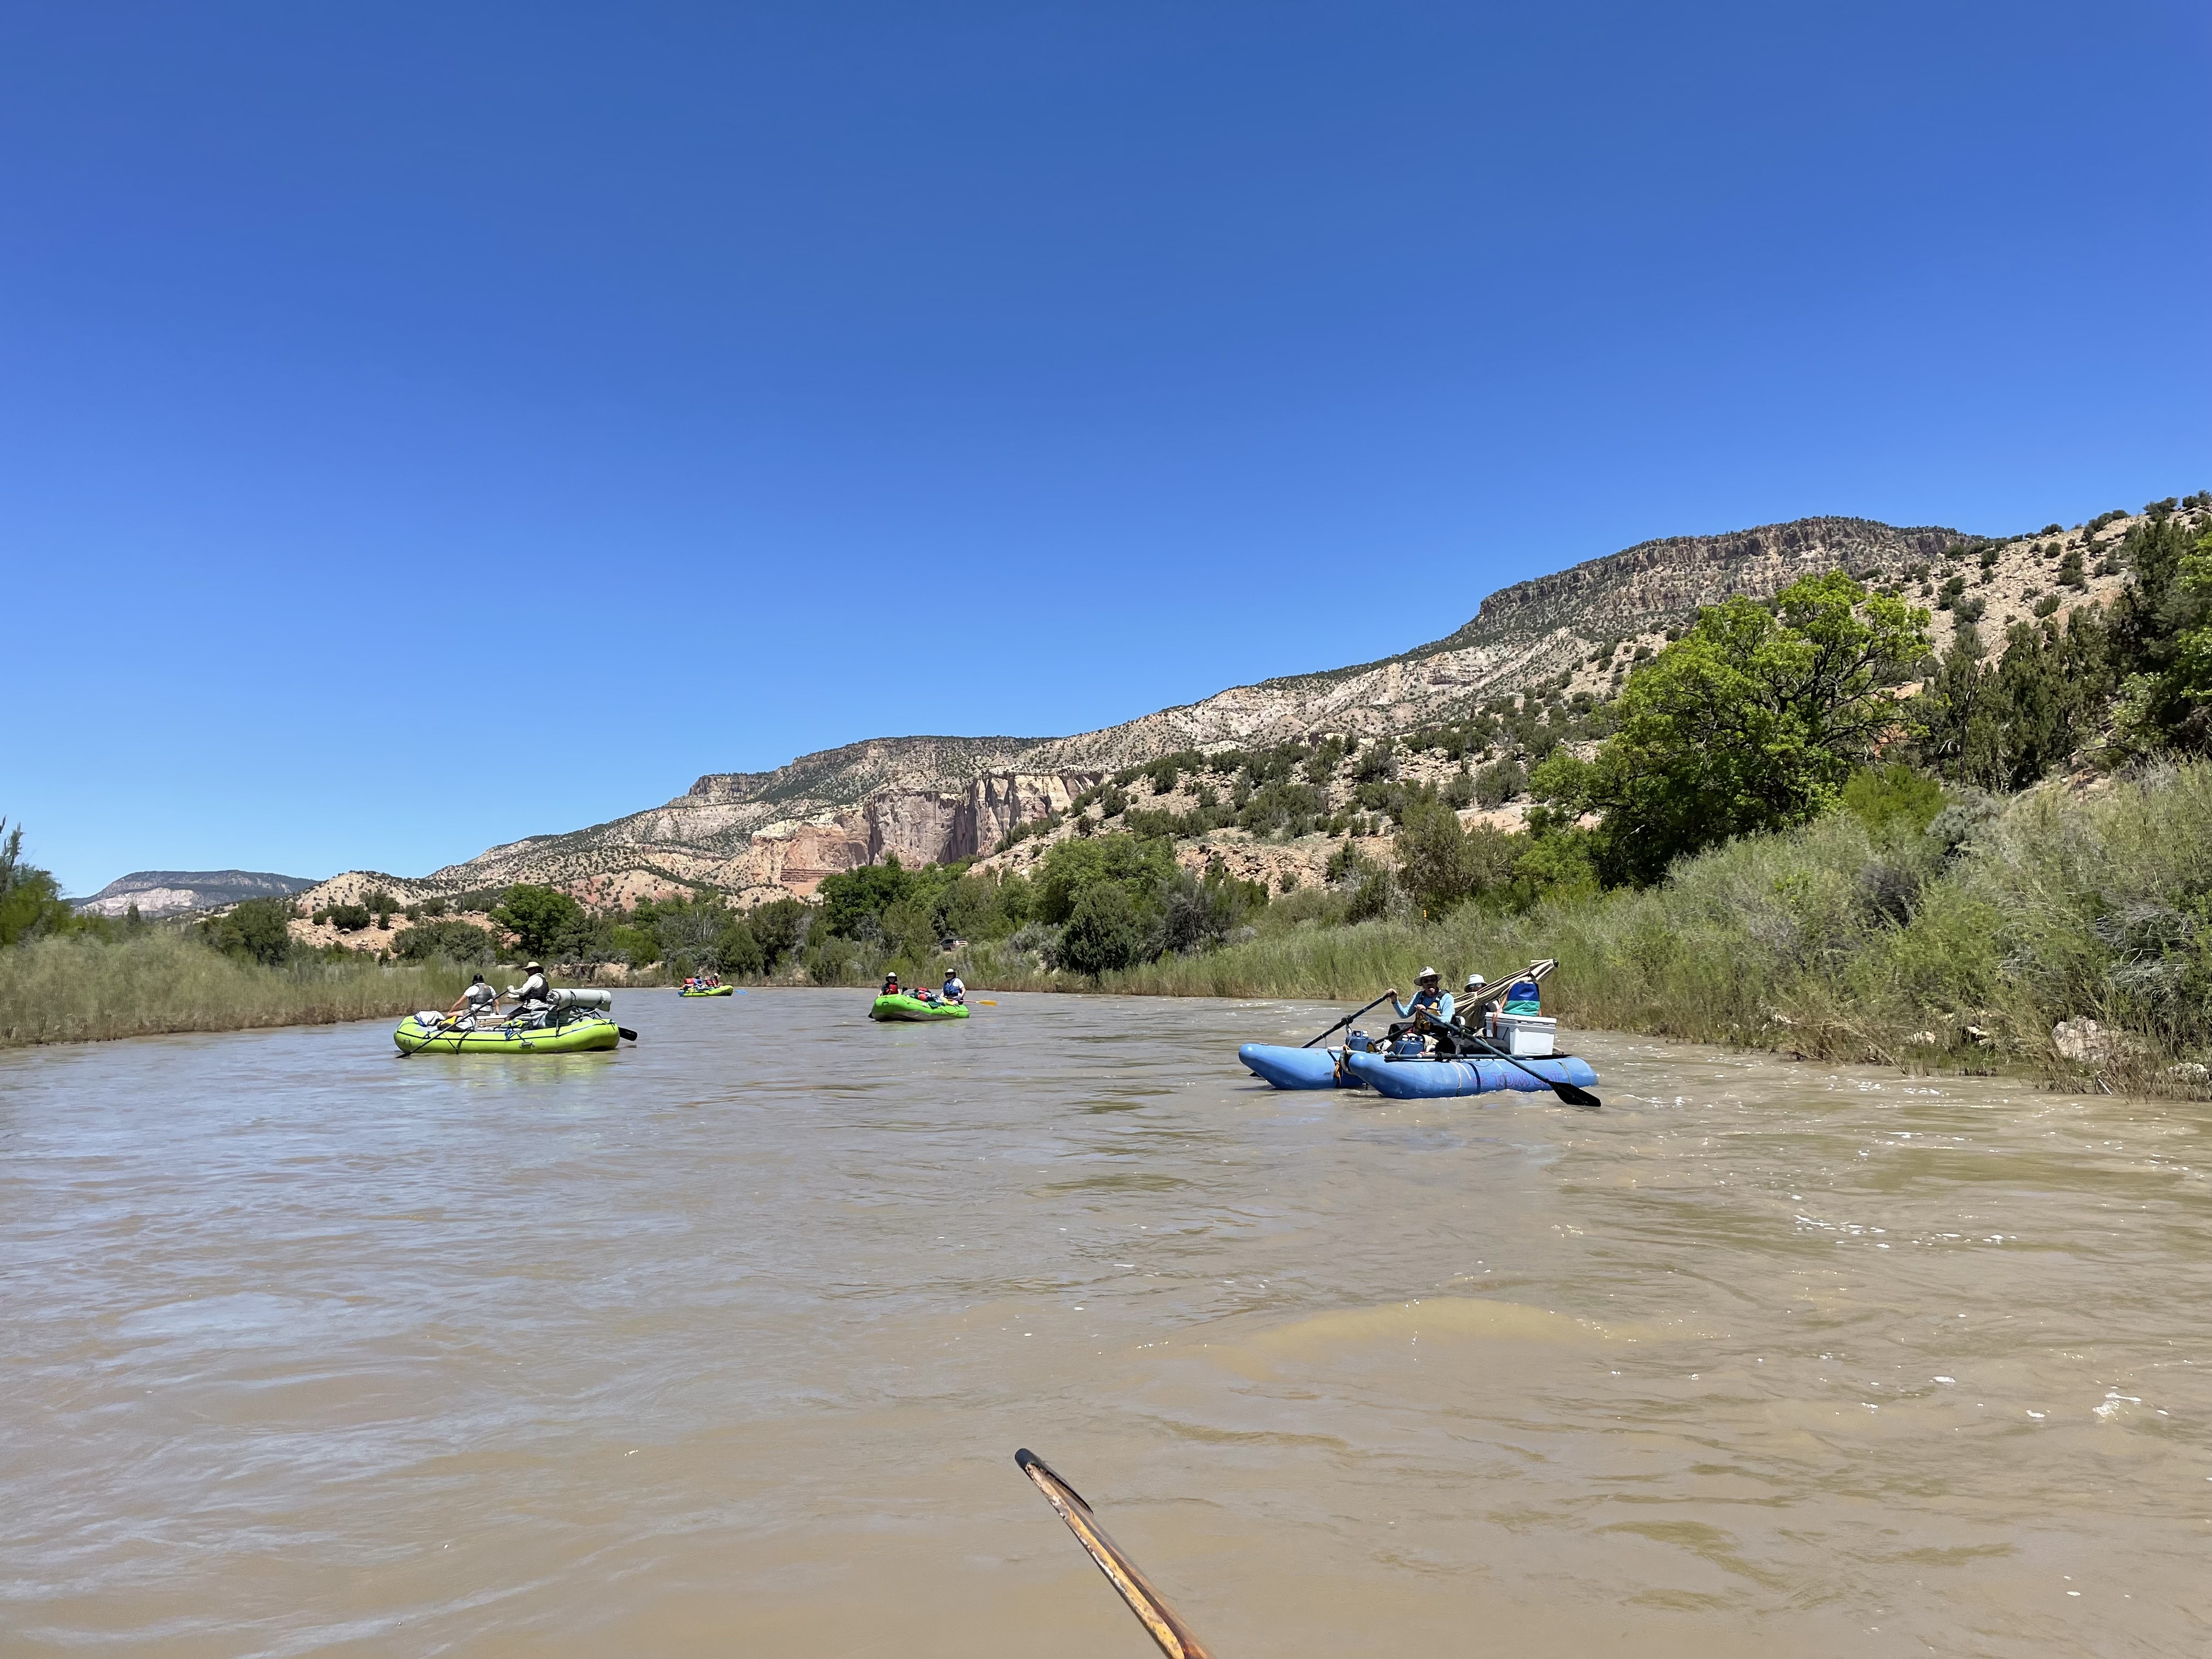 Rafts on the Rio Chama Day Use Segment